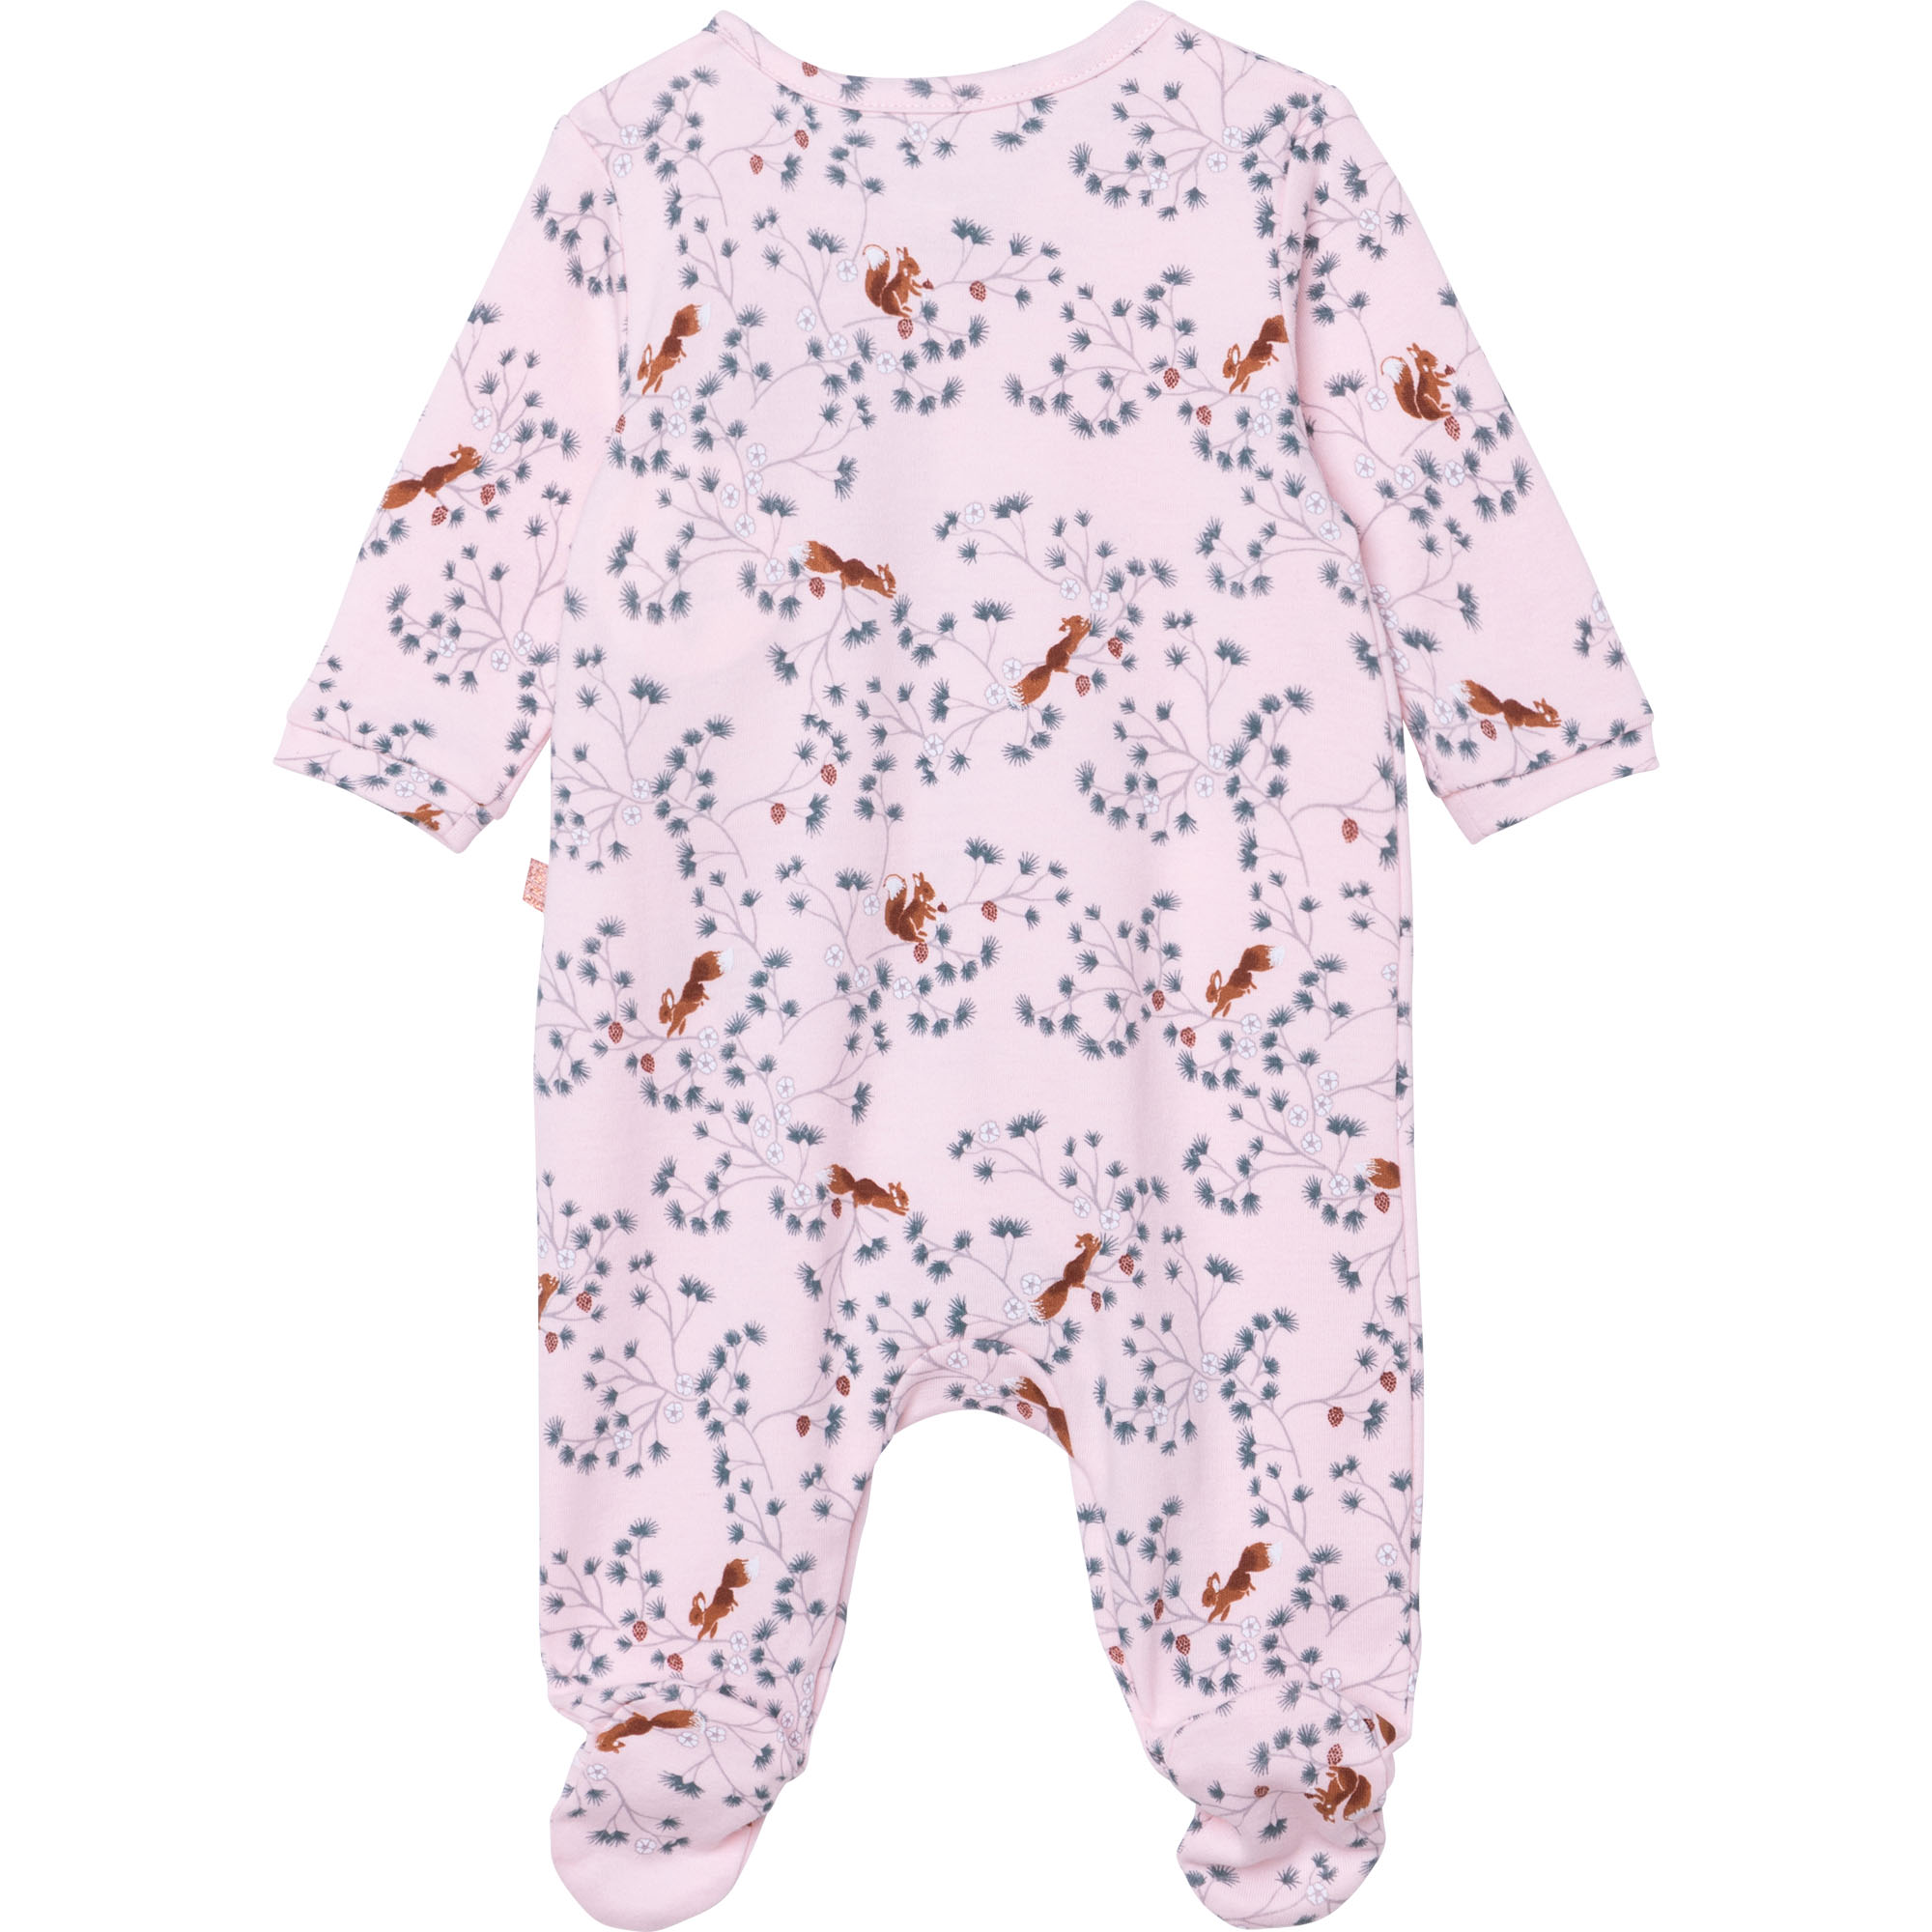 Printed cotton pajamas CARREMENT BEAU for GIRL